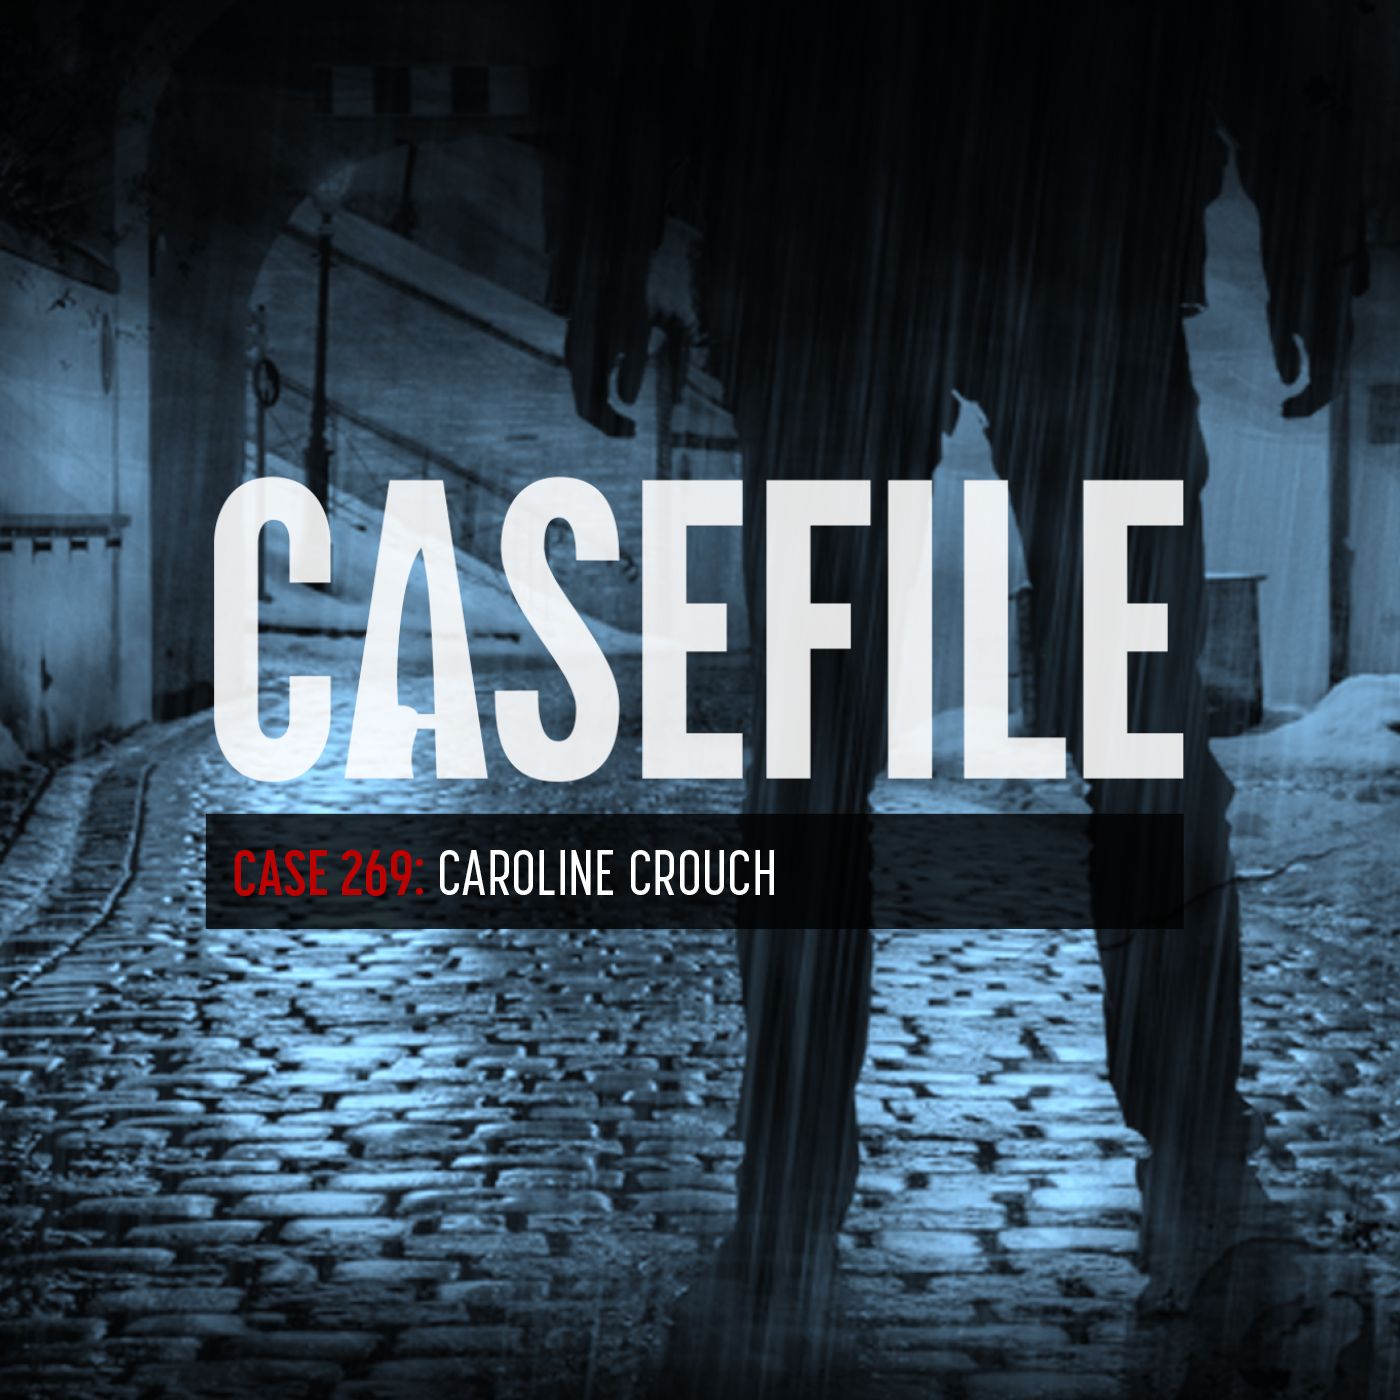 315: Case 269: Caroline Crouch